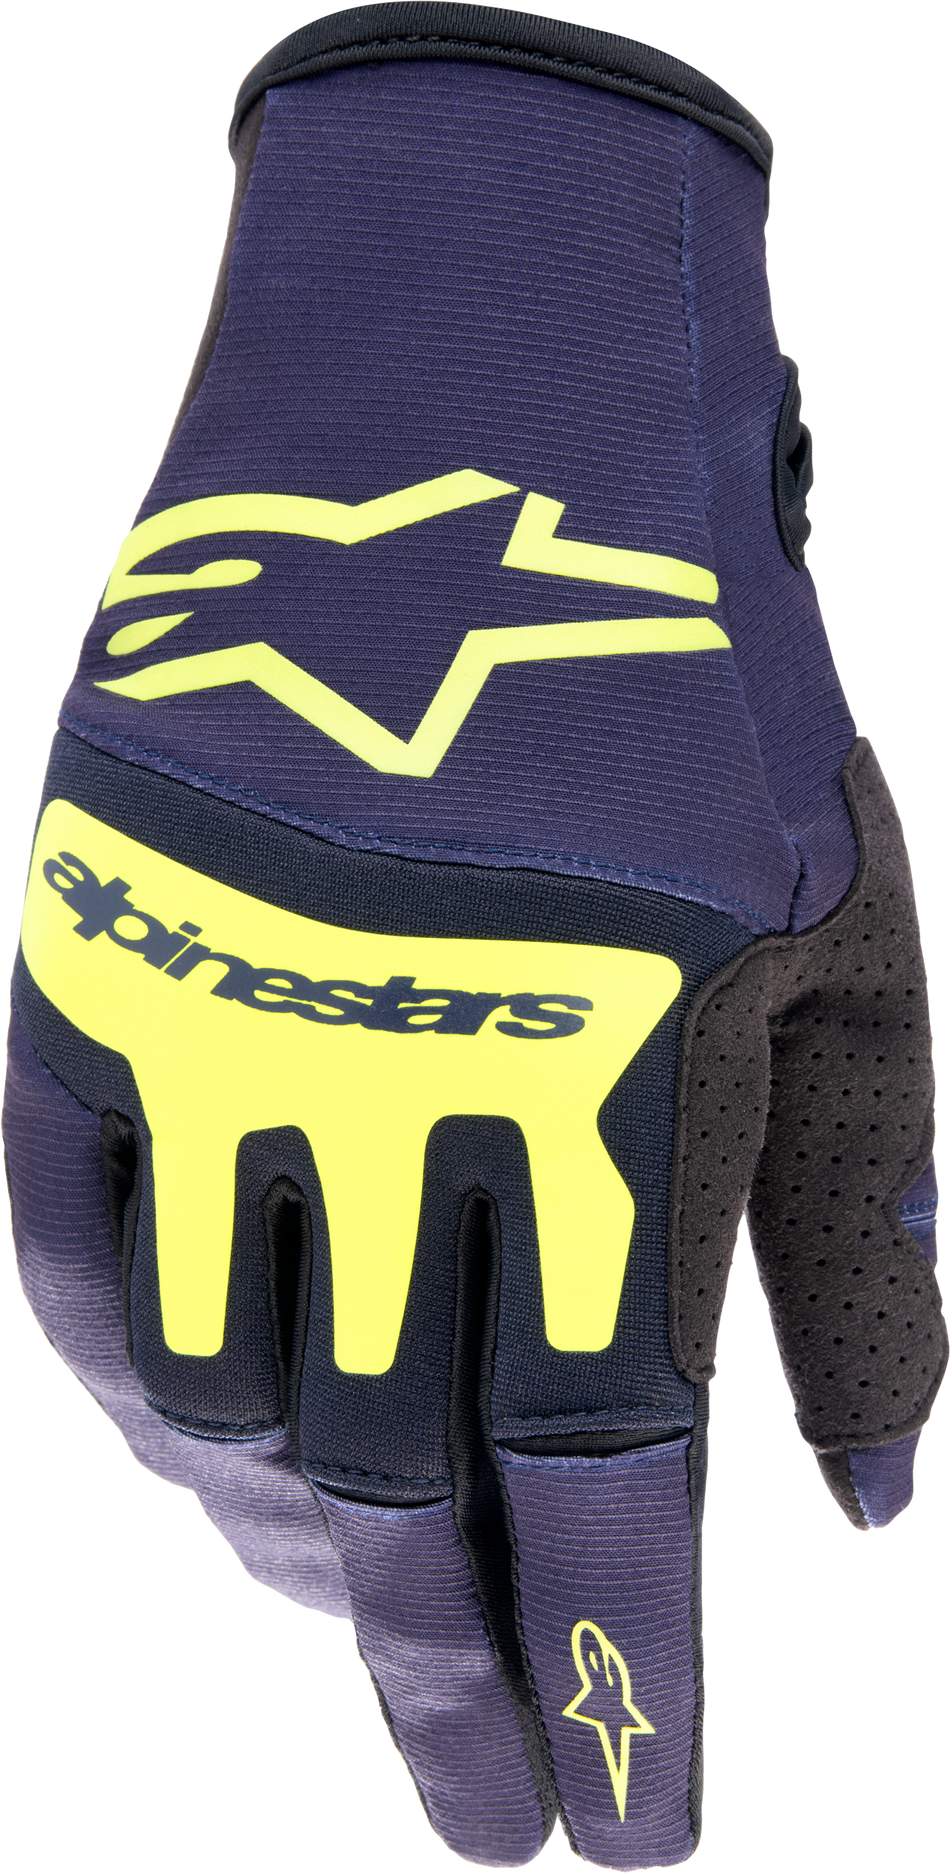 ALPINESTARS Techstar Gloves Night Navy/Yellow Fluo Md 3561023-7455-M